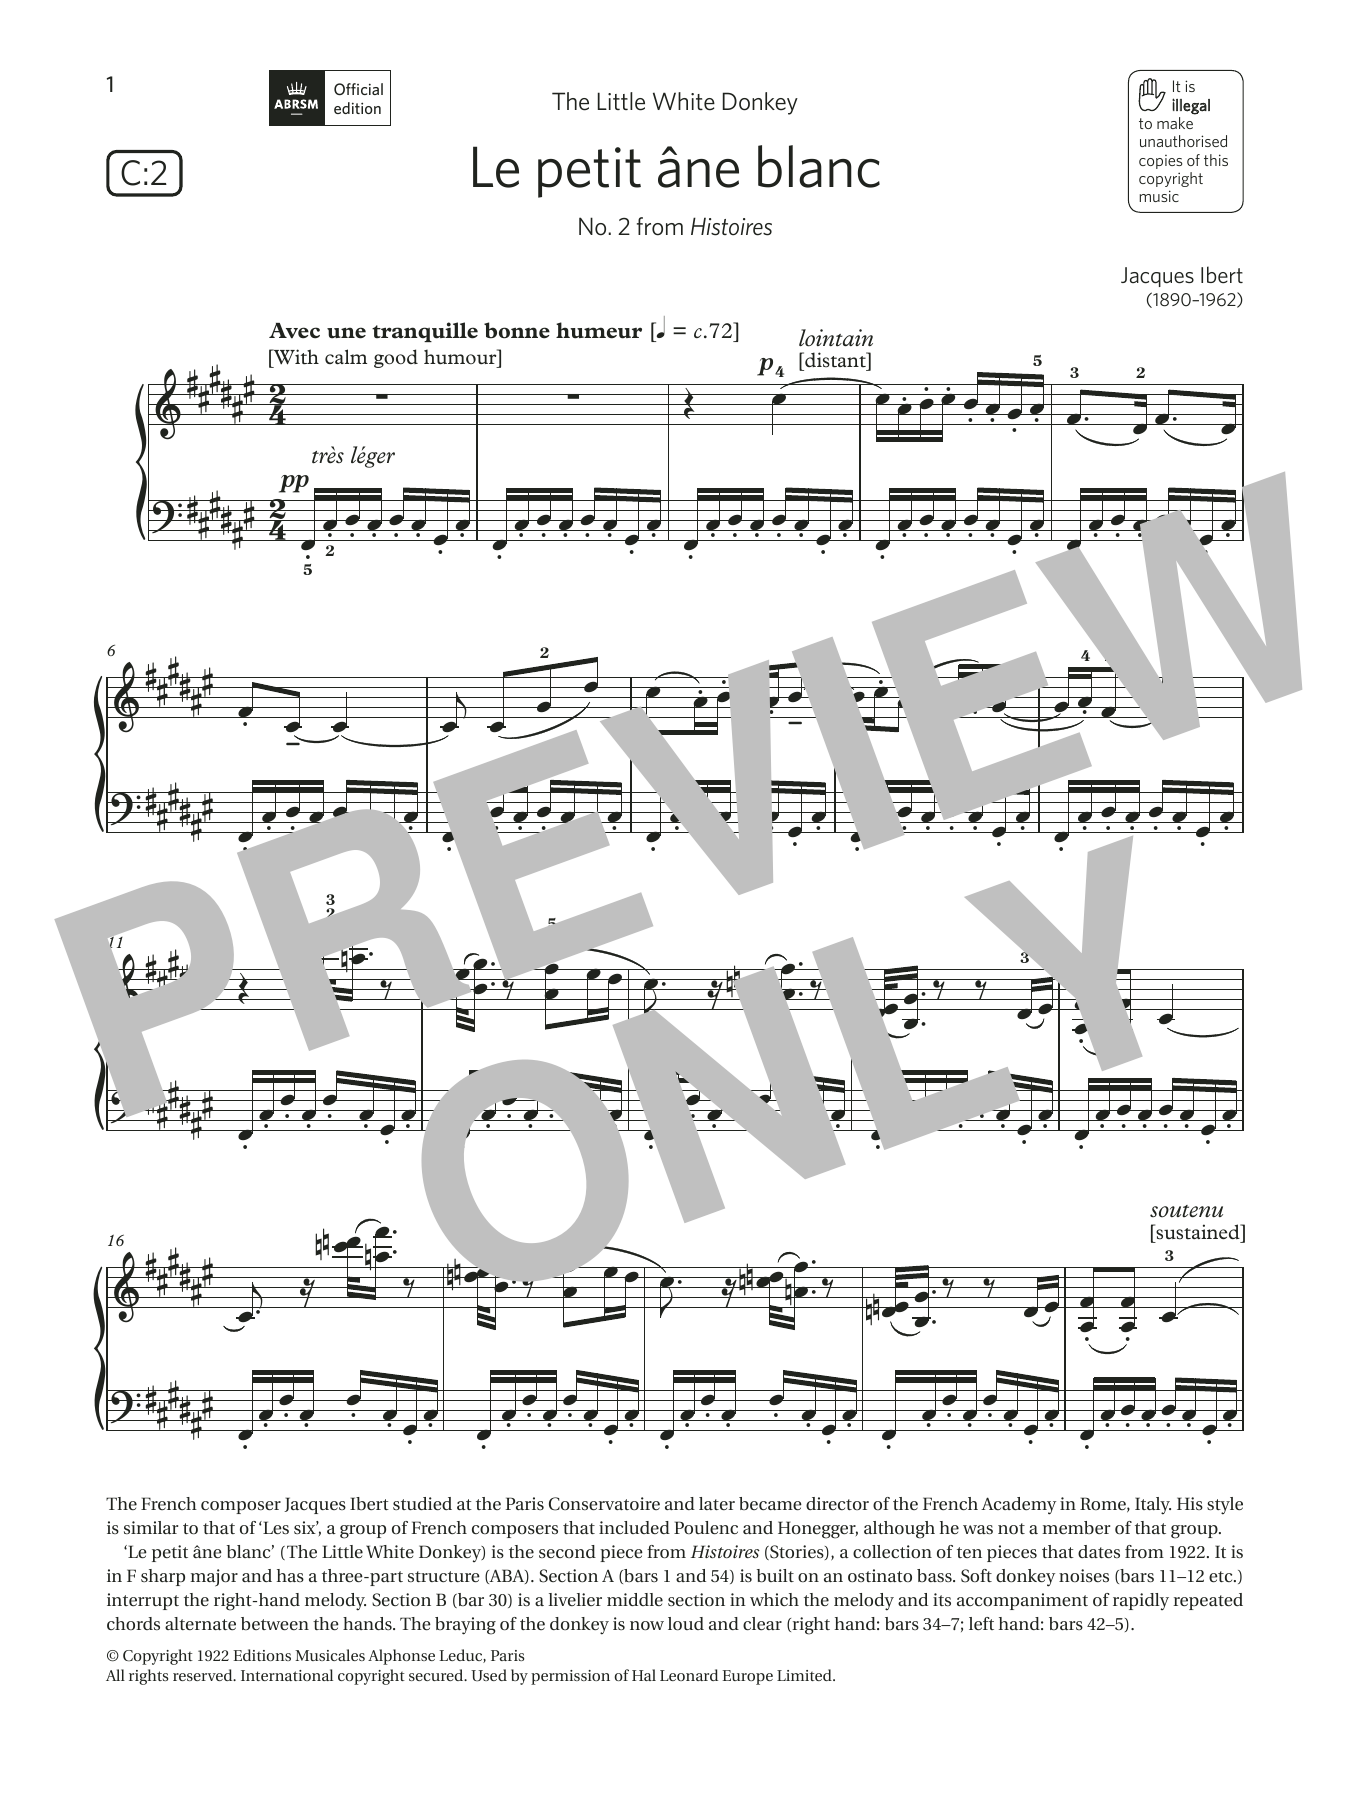 Download Jacques Ibert Le petit âne blanc (Grade 7, list C2, Sheet Music